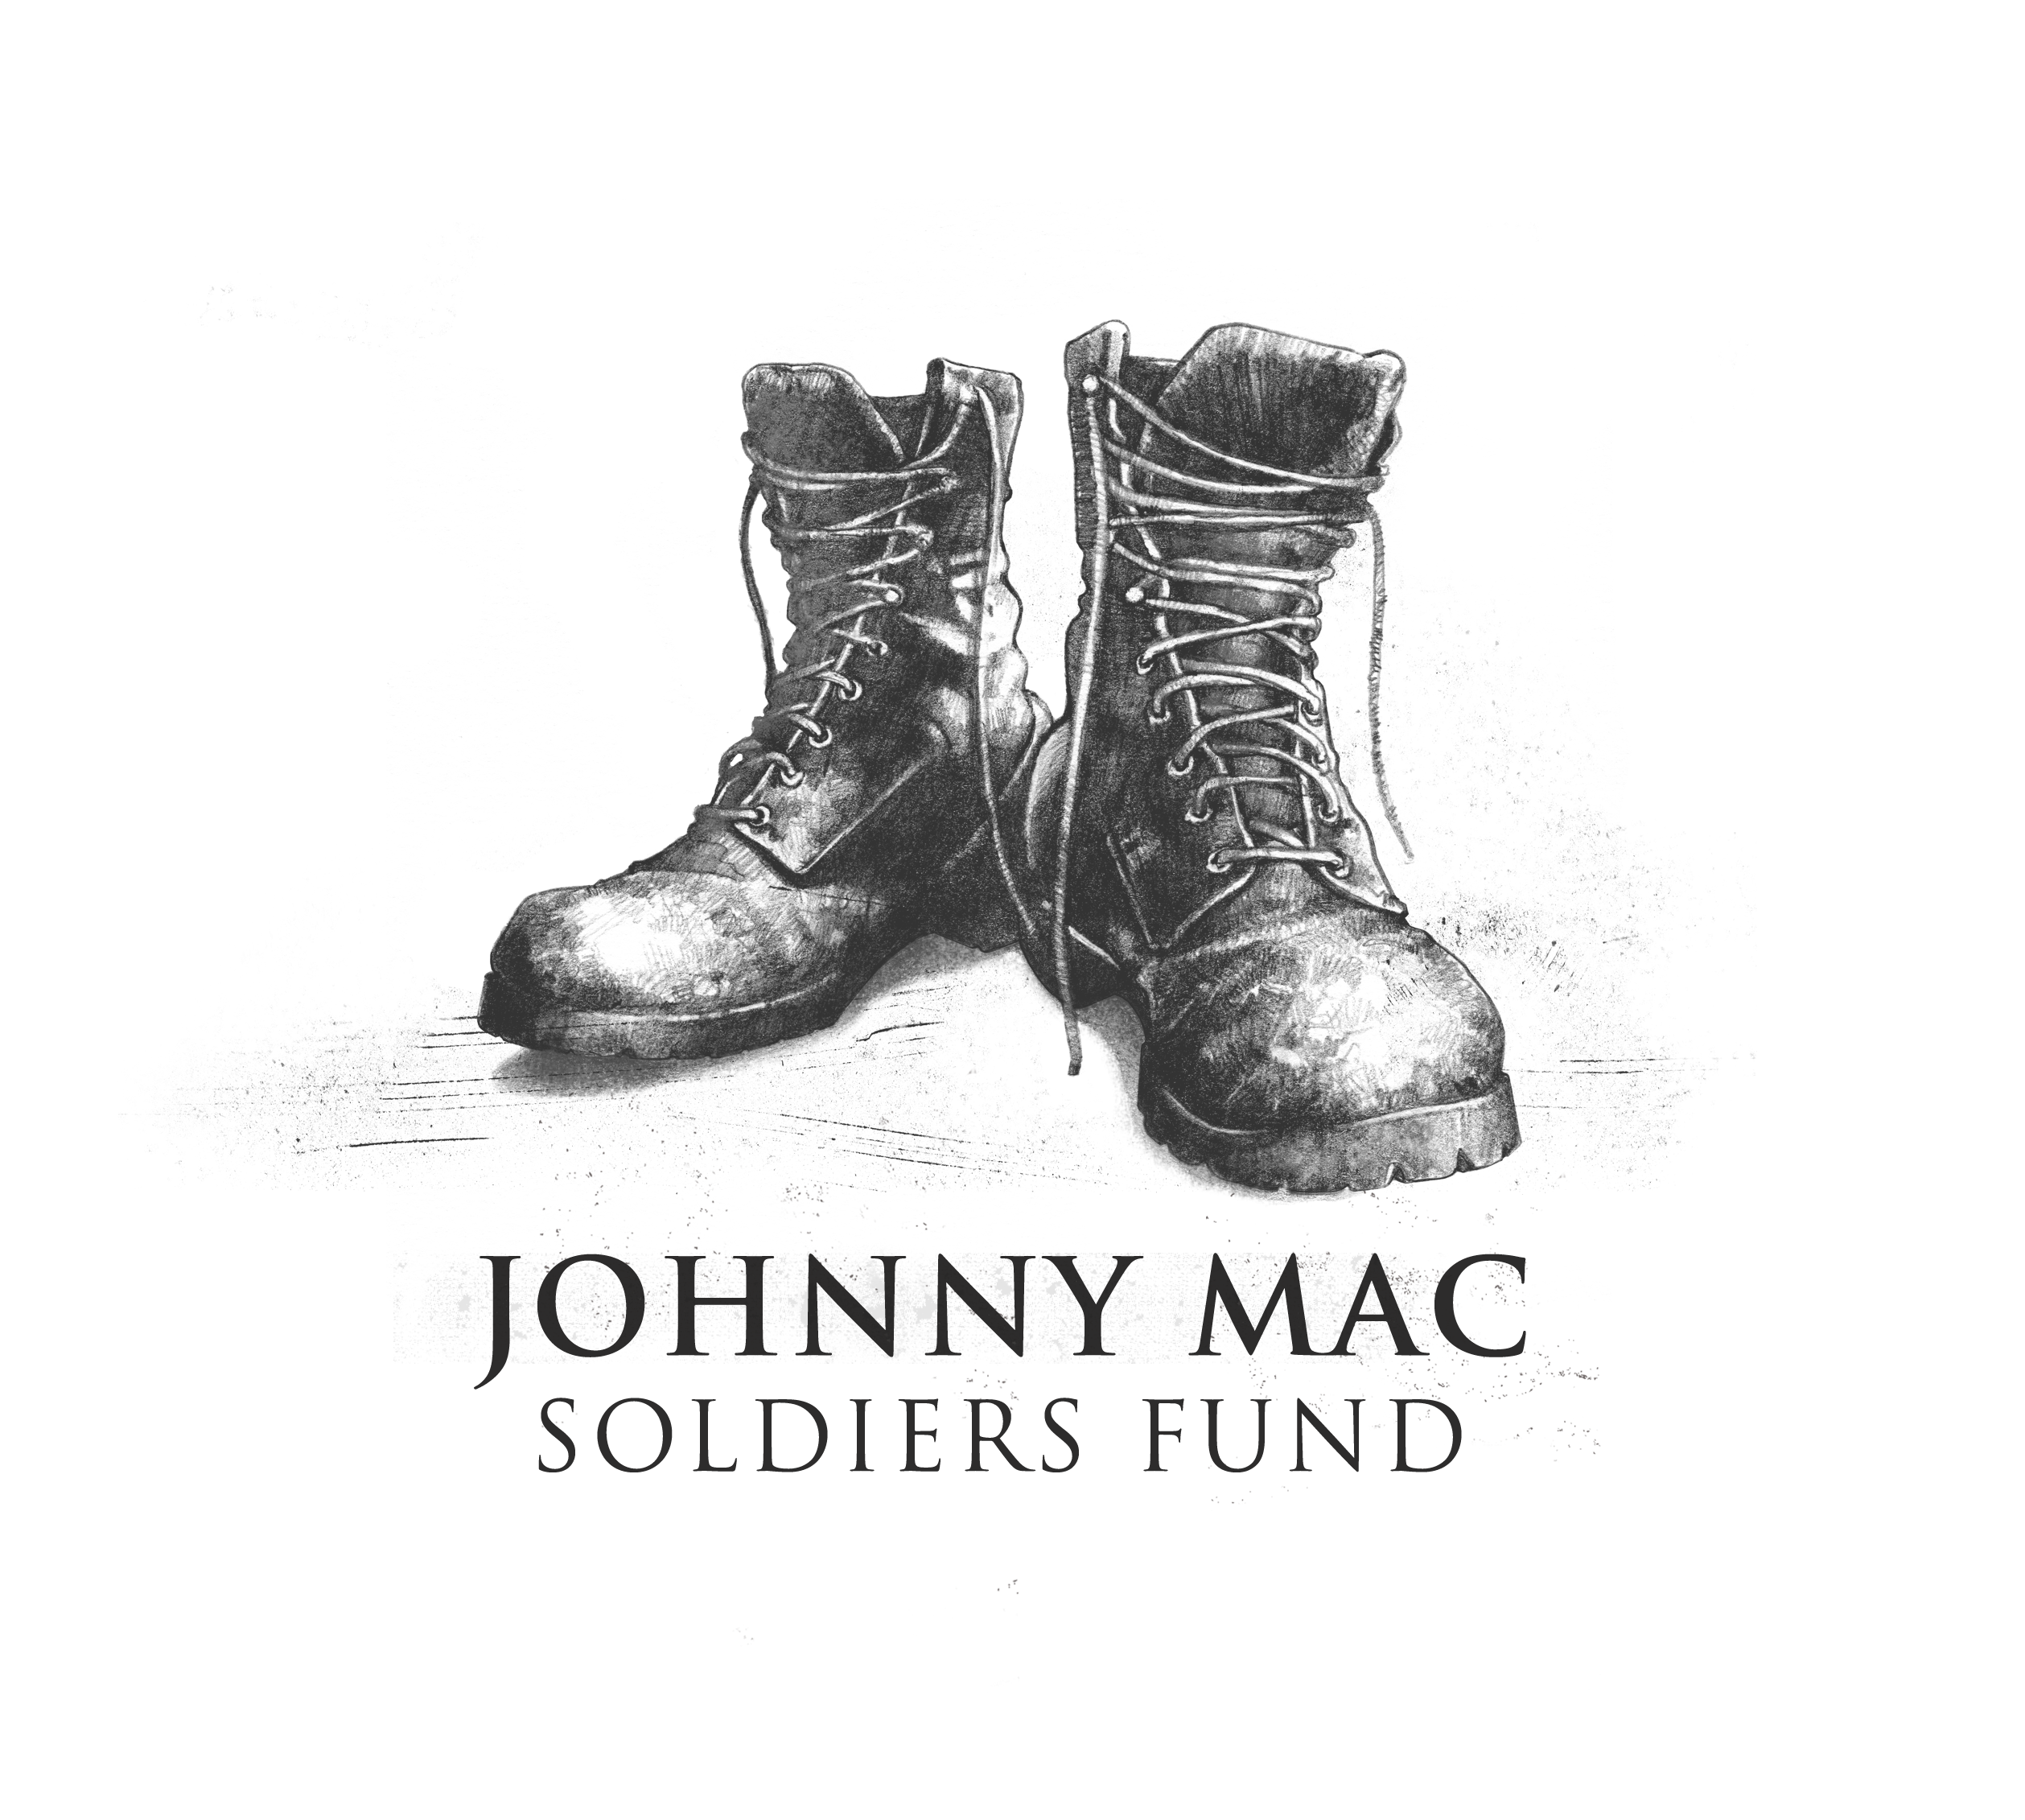 Johnny Mac Soldiers Fund Inc.